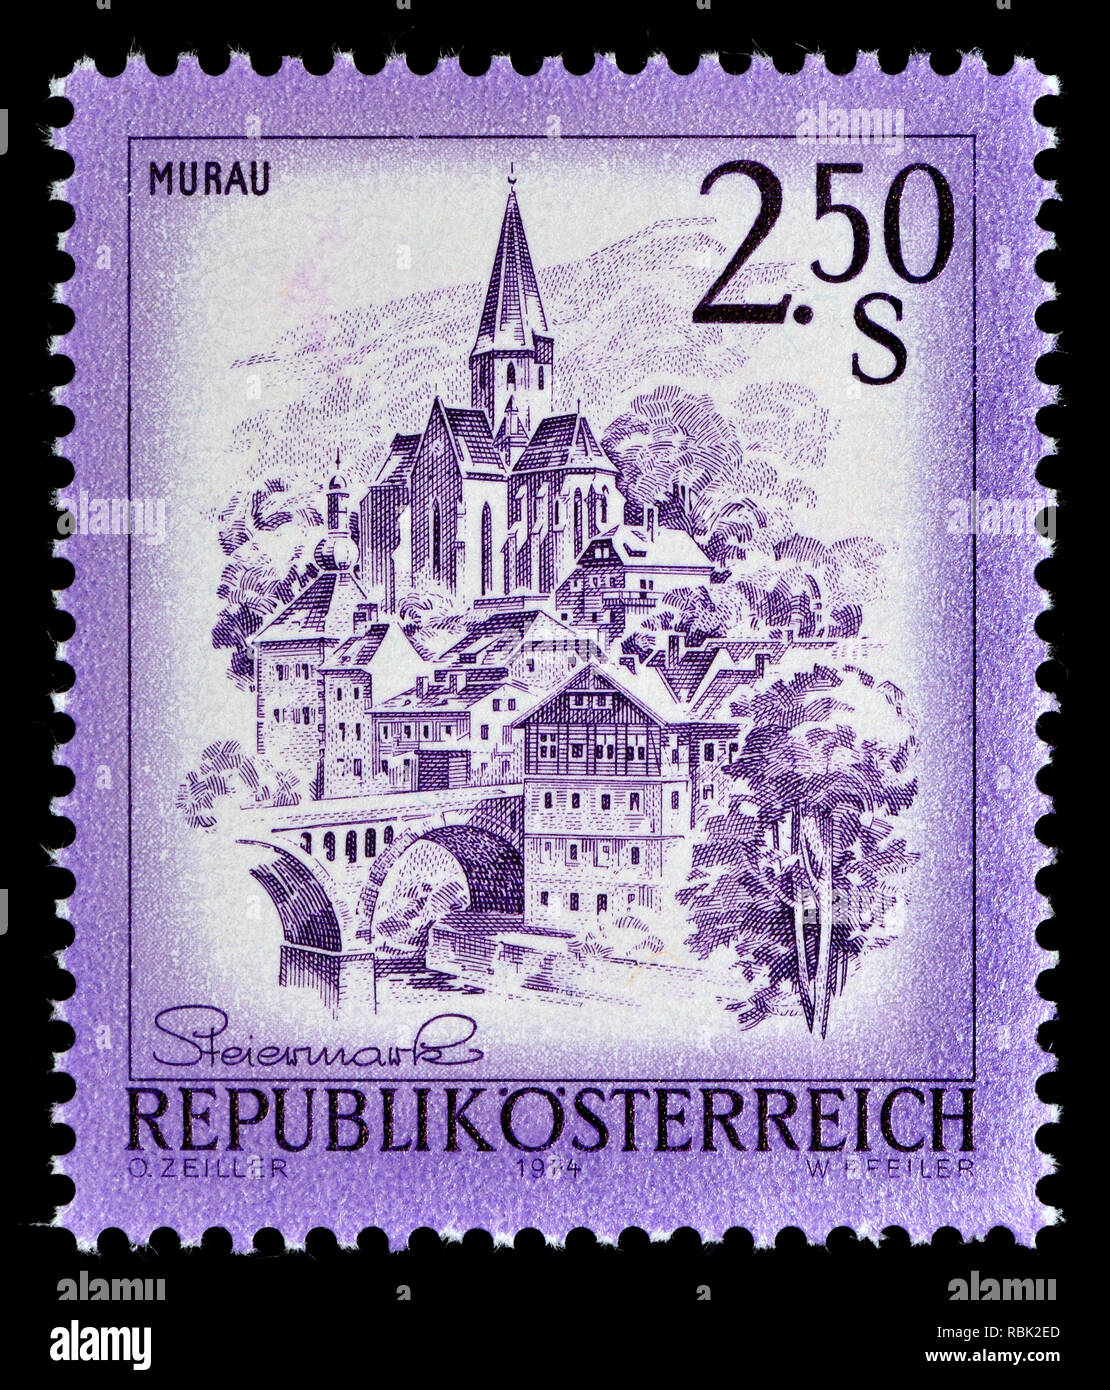 Austrian definitive postage stamp (1974) : Murau Stock Photo